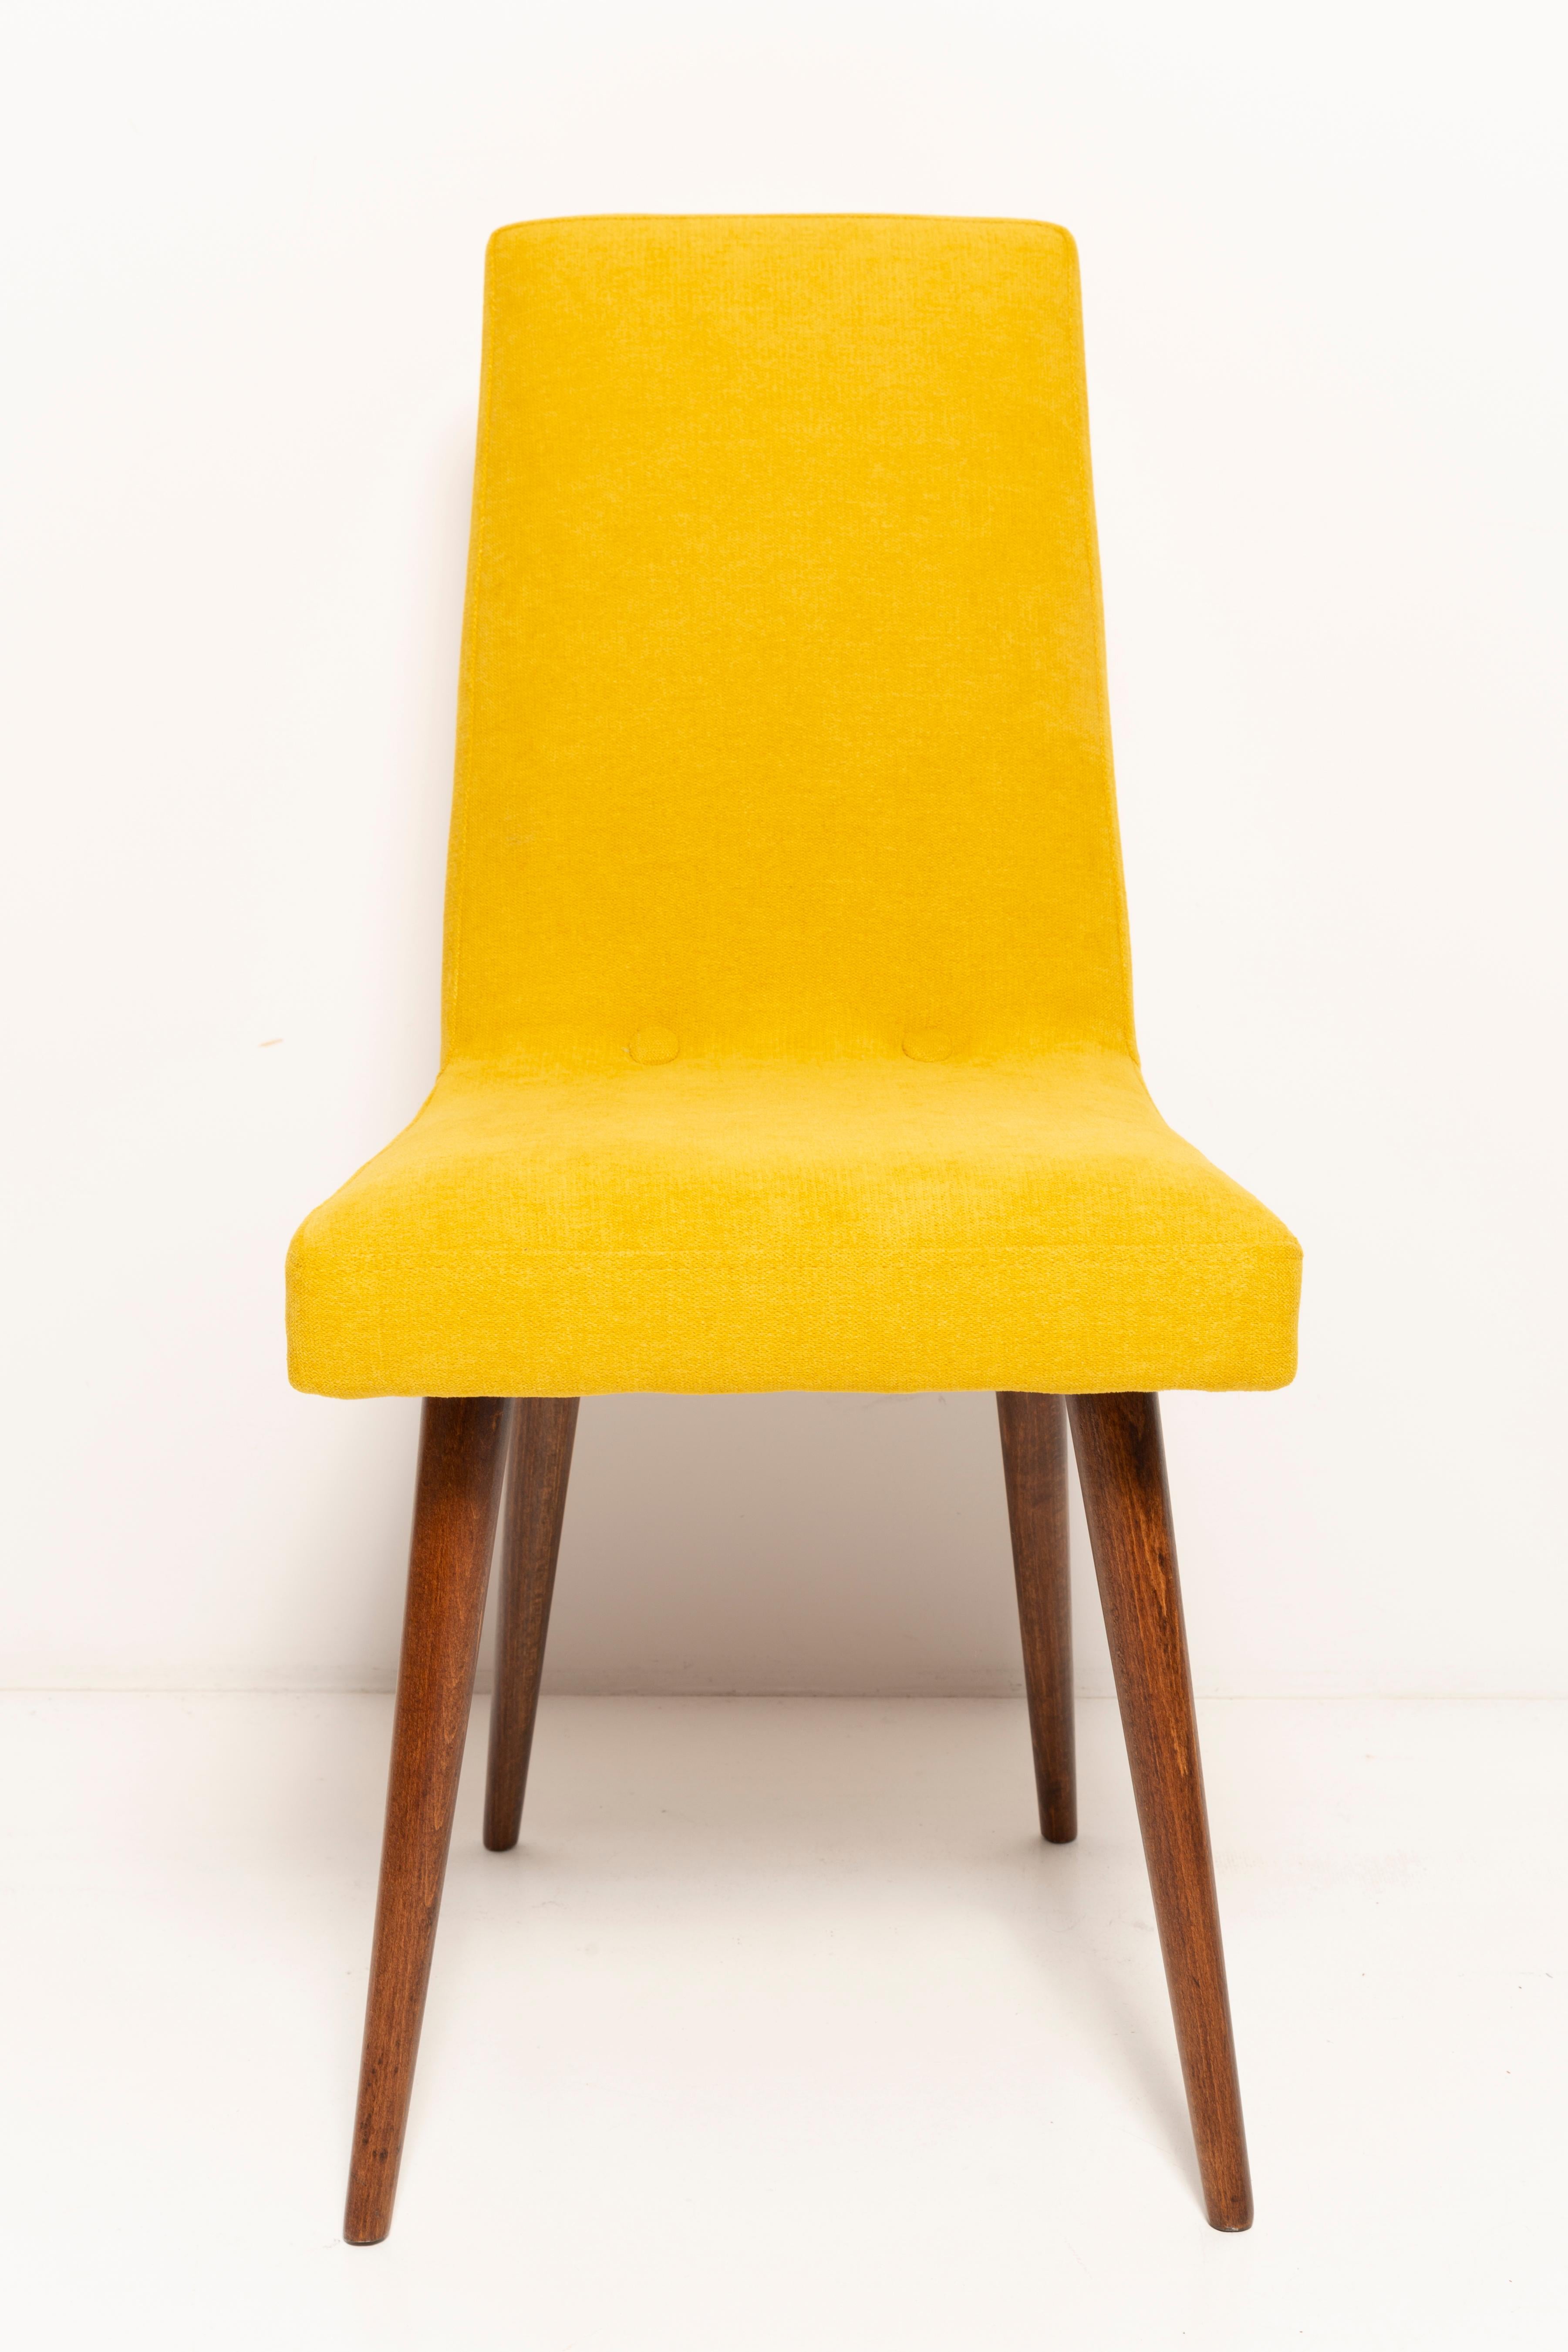 20th Century Mustard Yellow Wool Chair, Rajmund Halas, Europe, 1960s For Sale 4